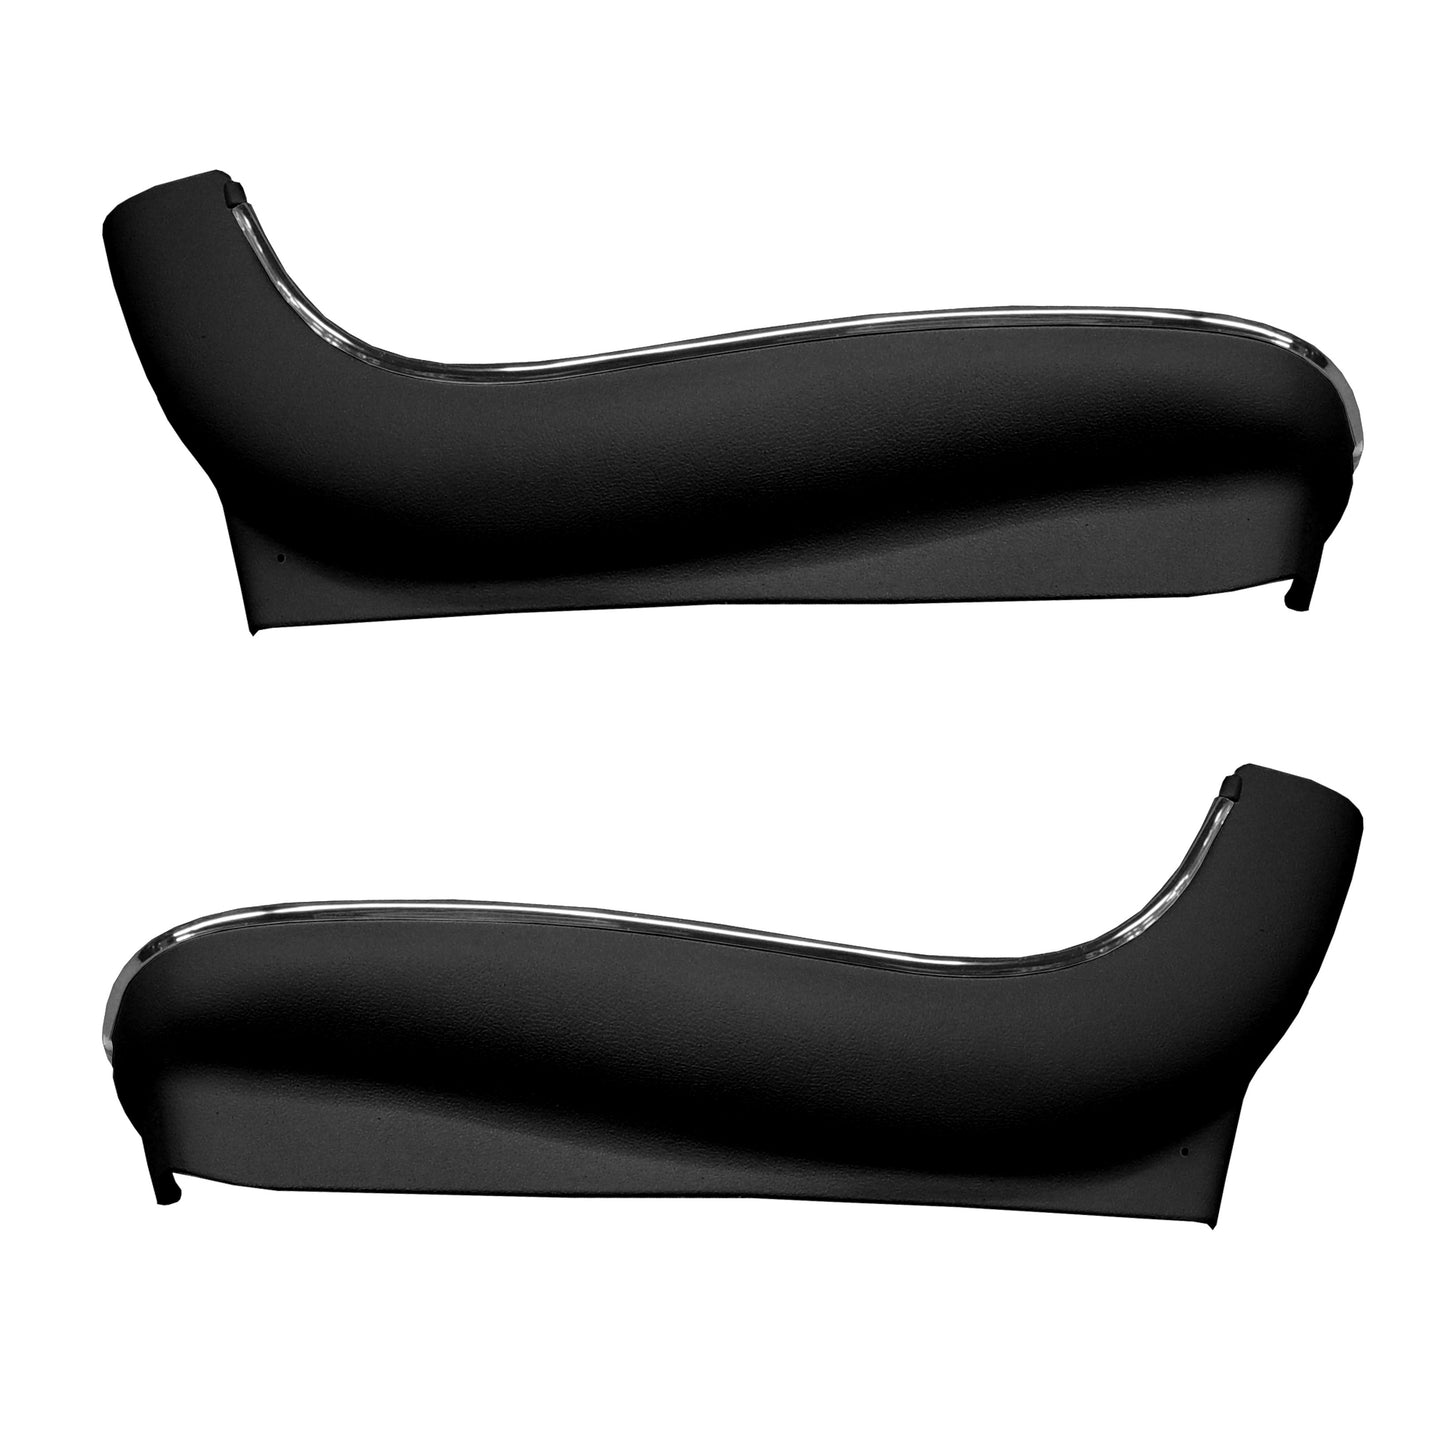 69/72 BUCKET SEAT BASES - BLK,69/72 BUCKET SEATBASES - BLACK,69/72 BKT SEAT BASES - BLACK